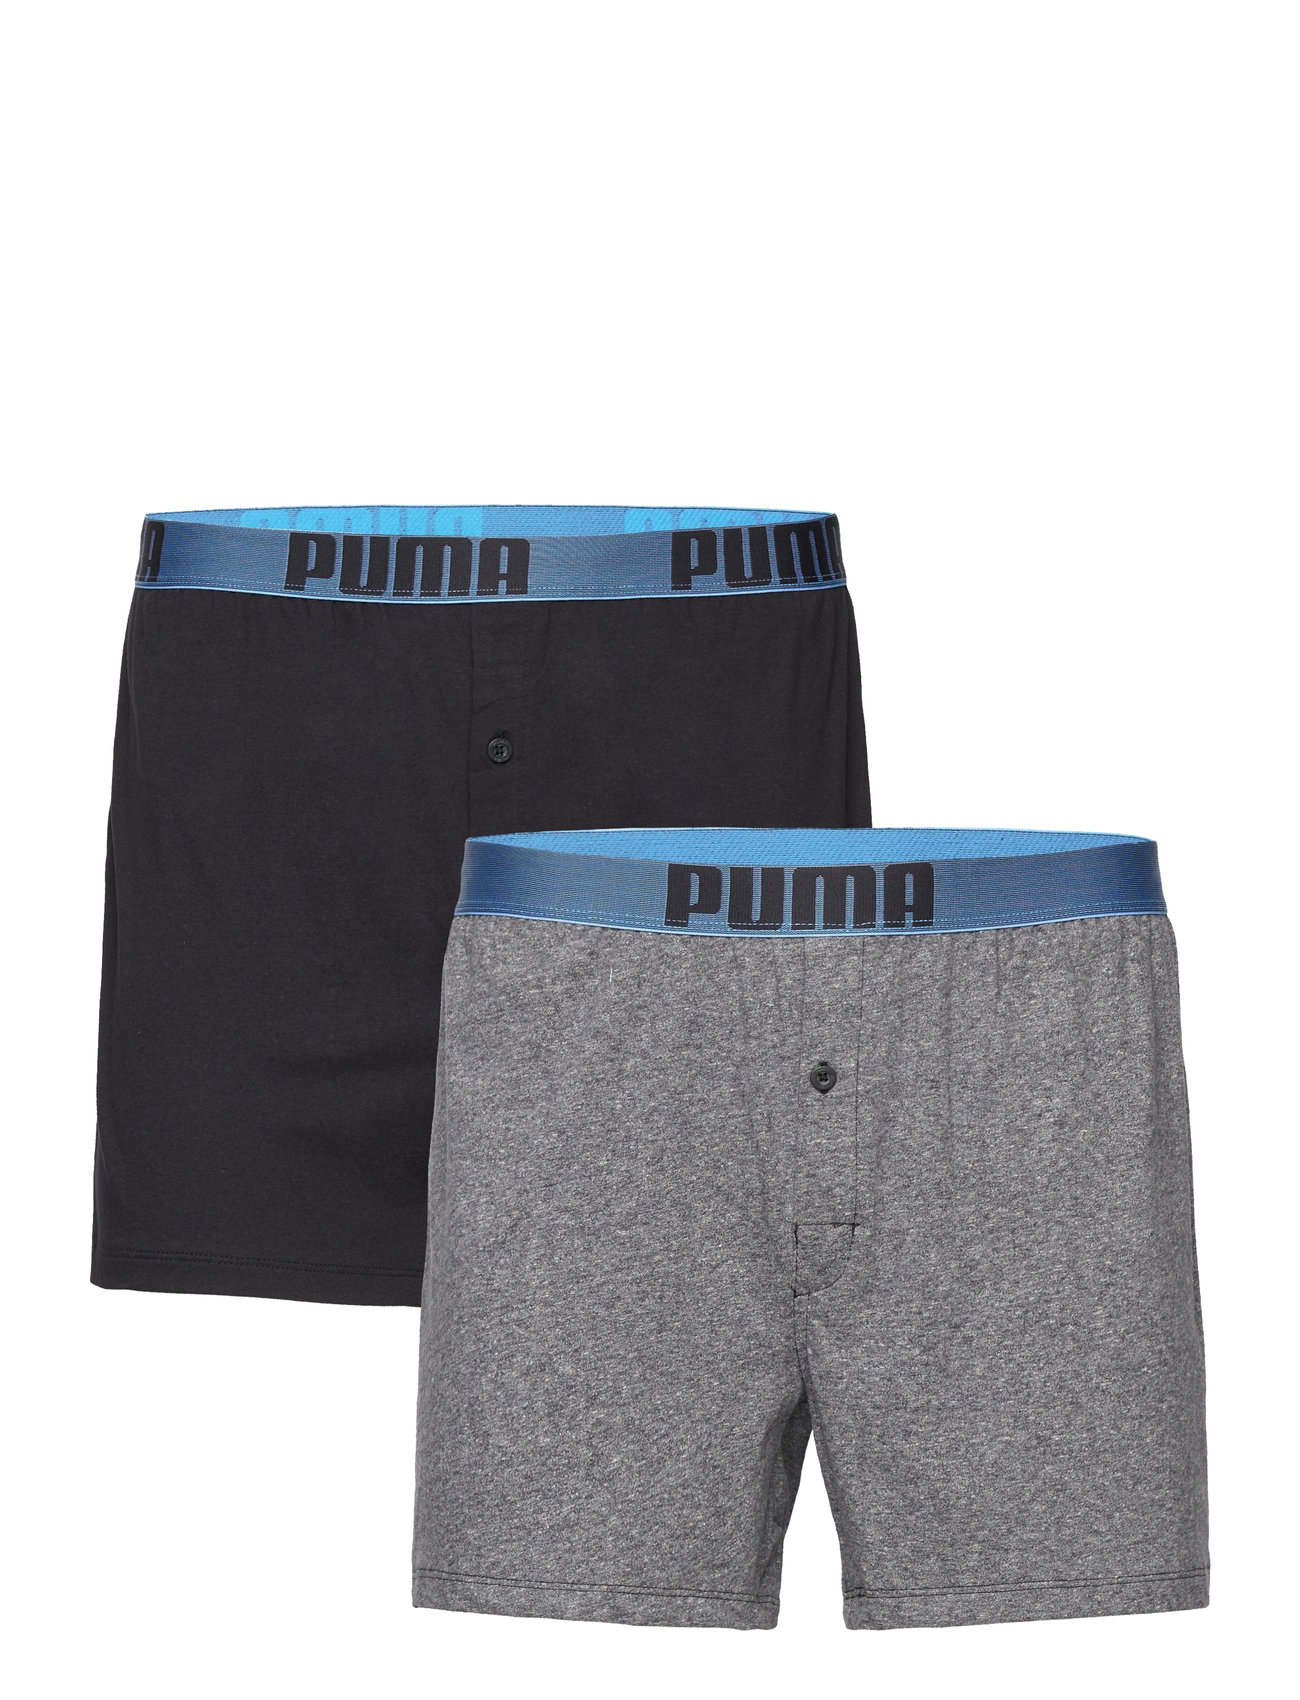 PUMA Puma Men Loose Fit Underpants 2p - Boxer Jersey